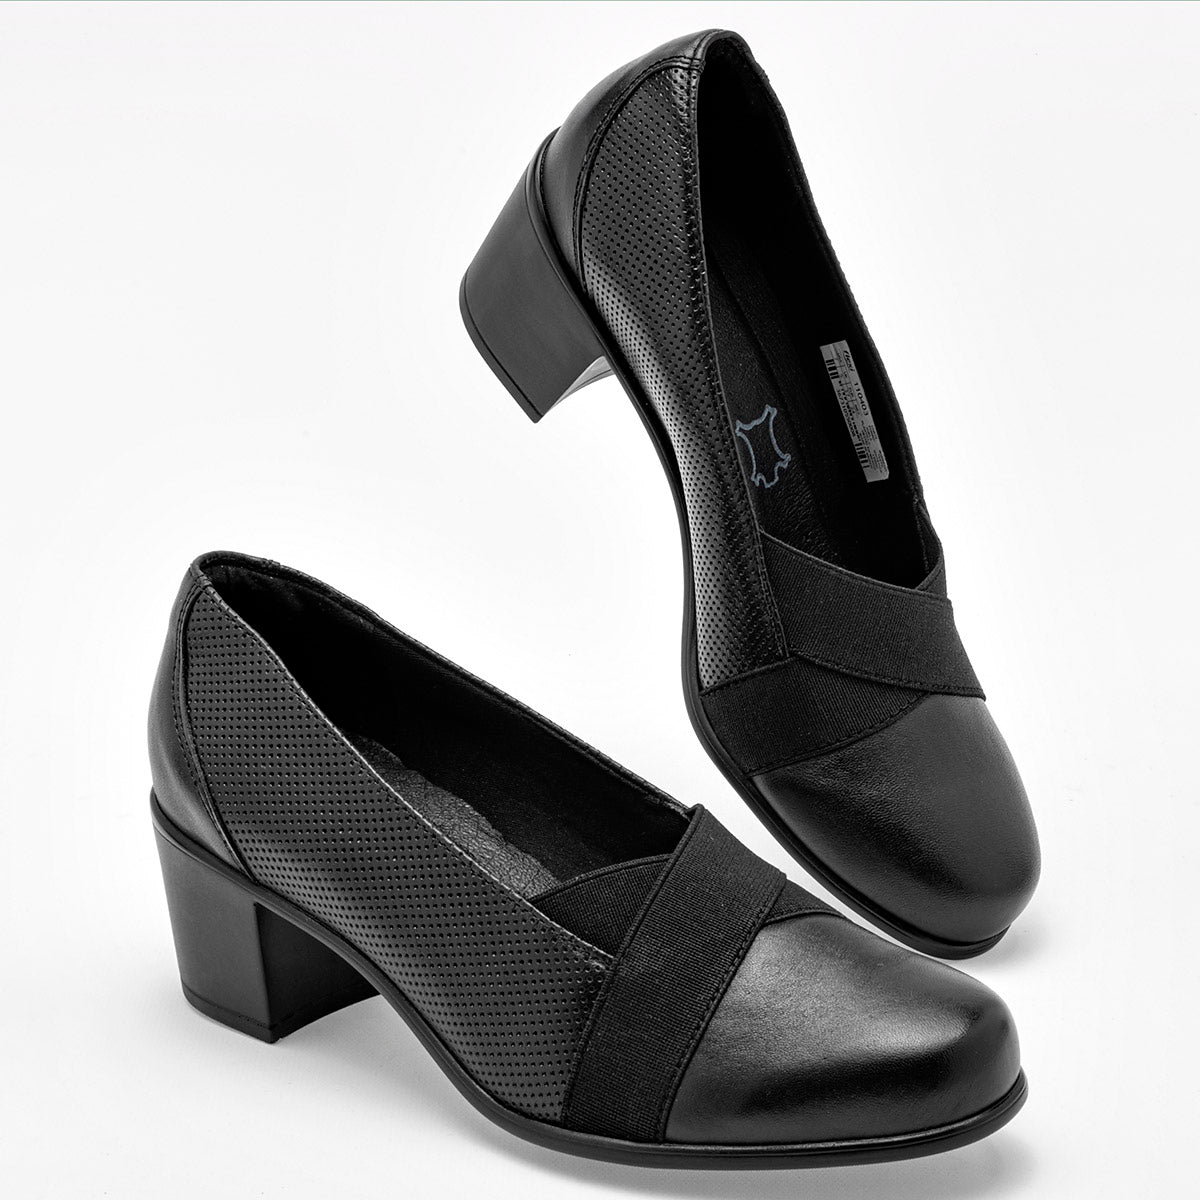 Pakar.com - Mayo: Regalos para mamá | Zapatos para mujer cod-120596